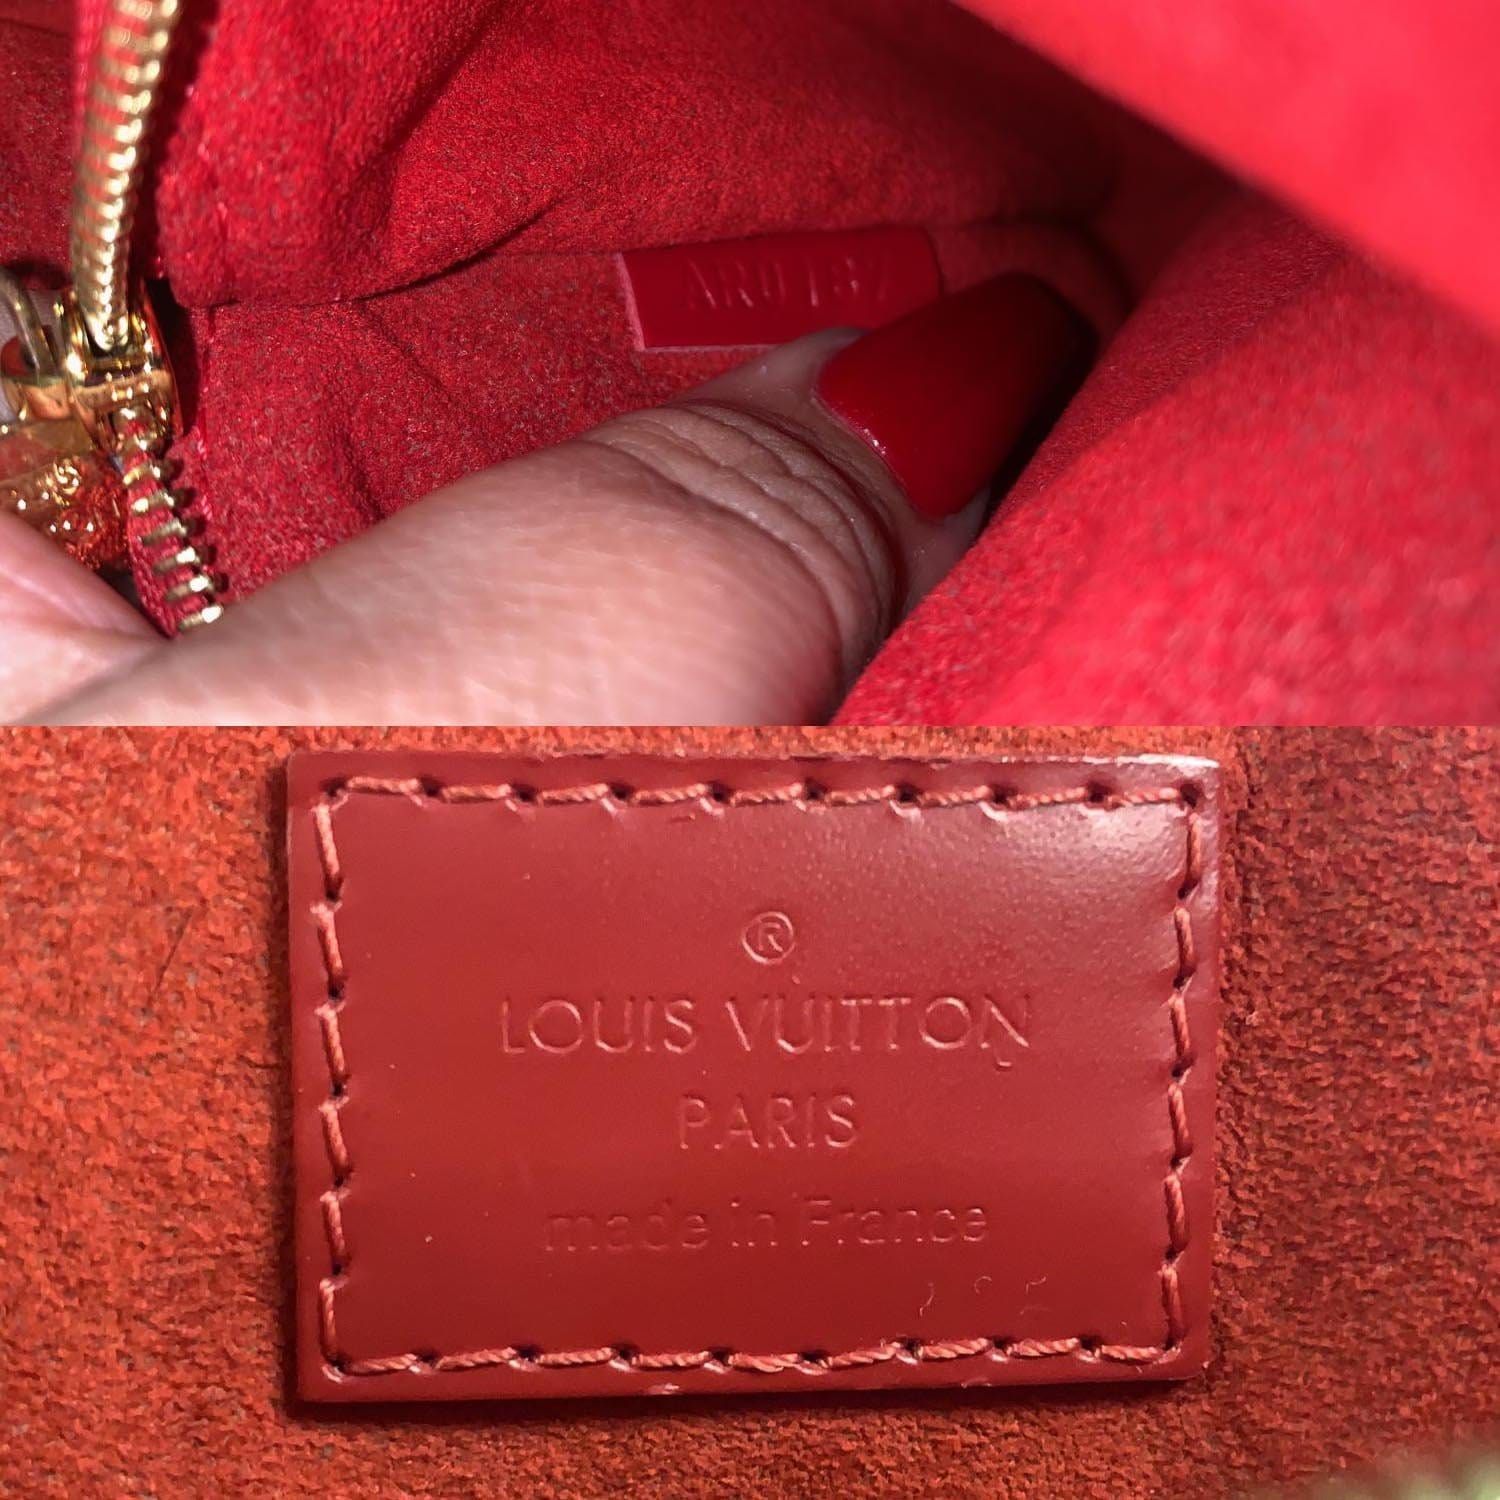 Louis Vuitton Caissa Clutch Review 